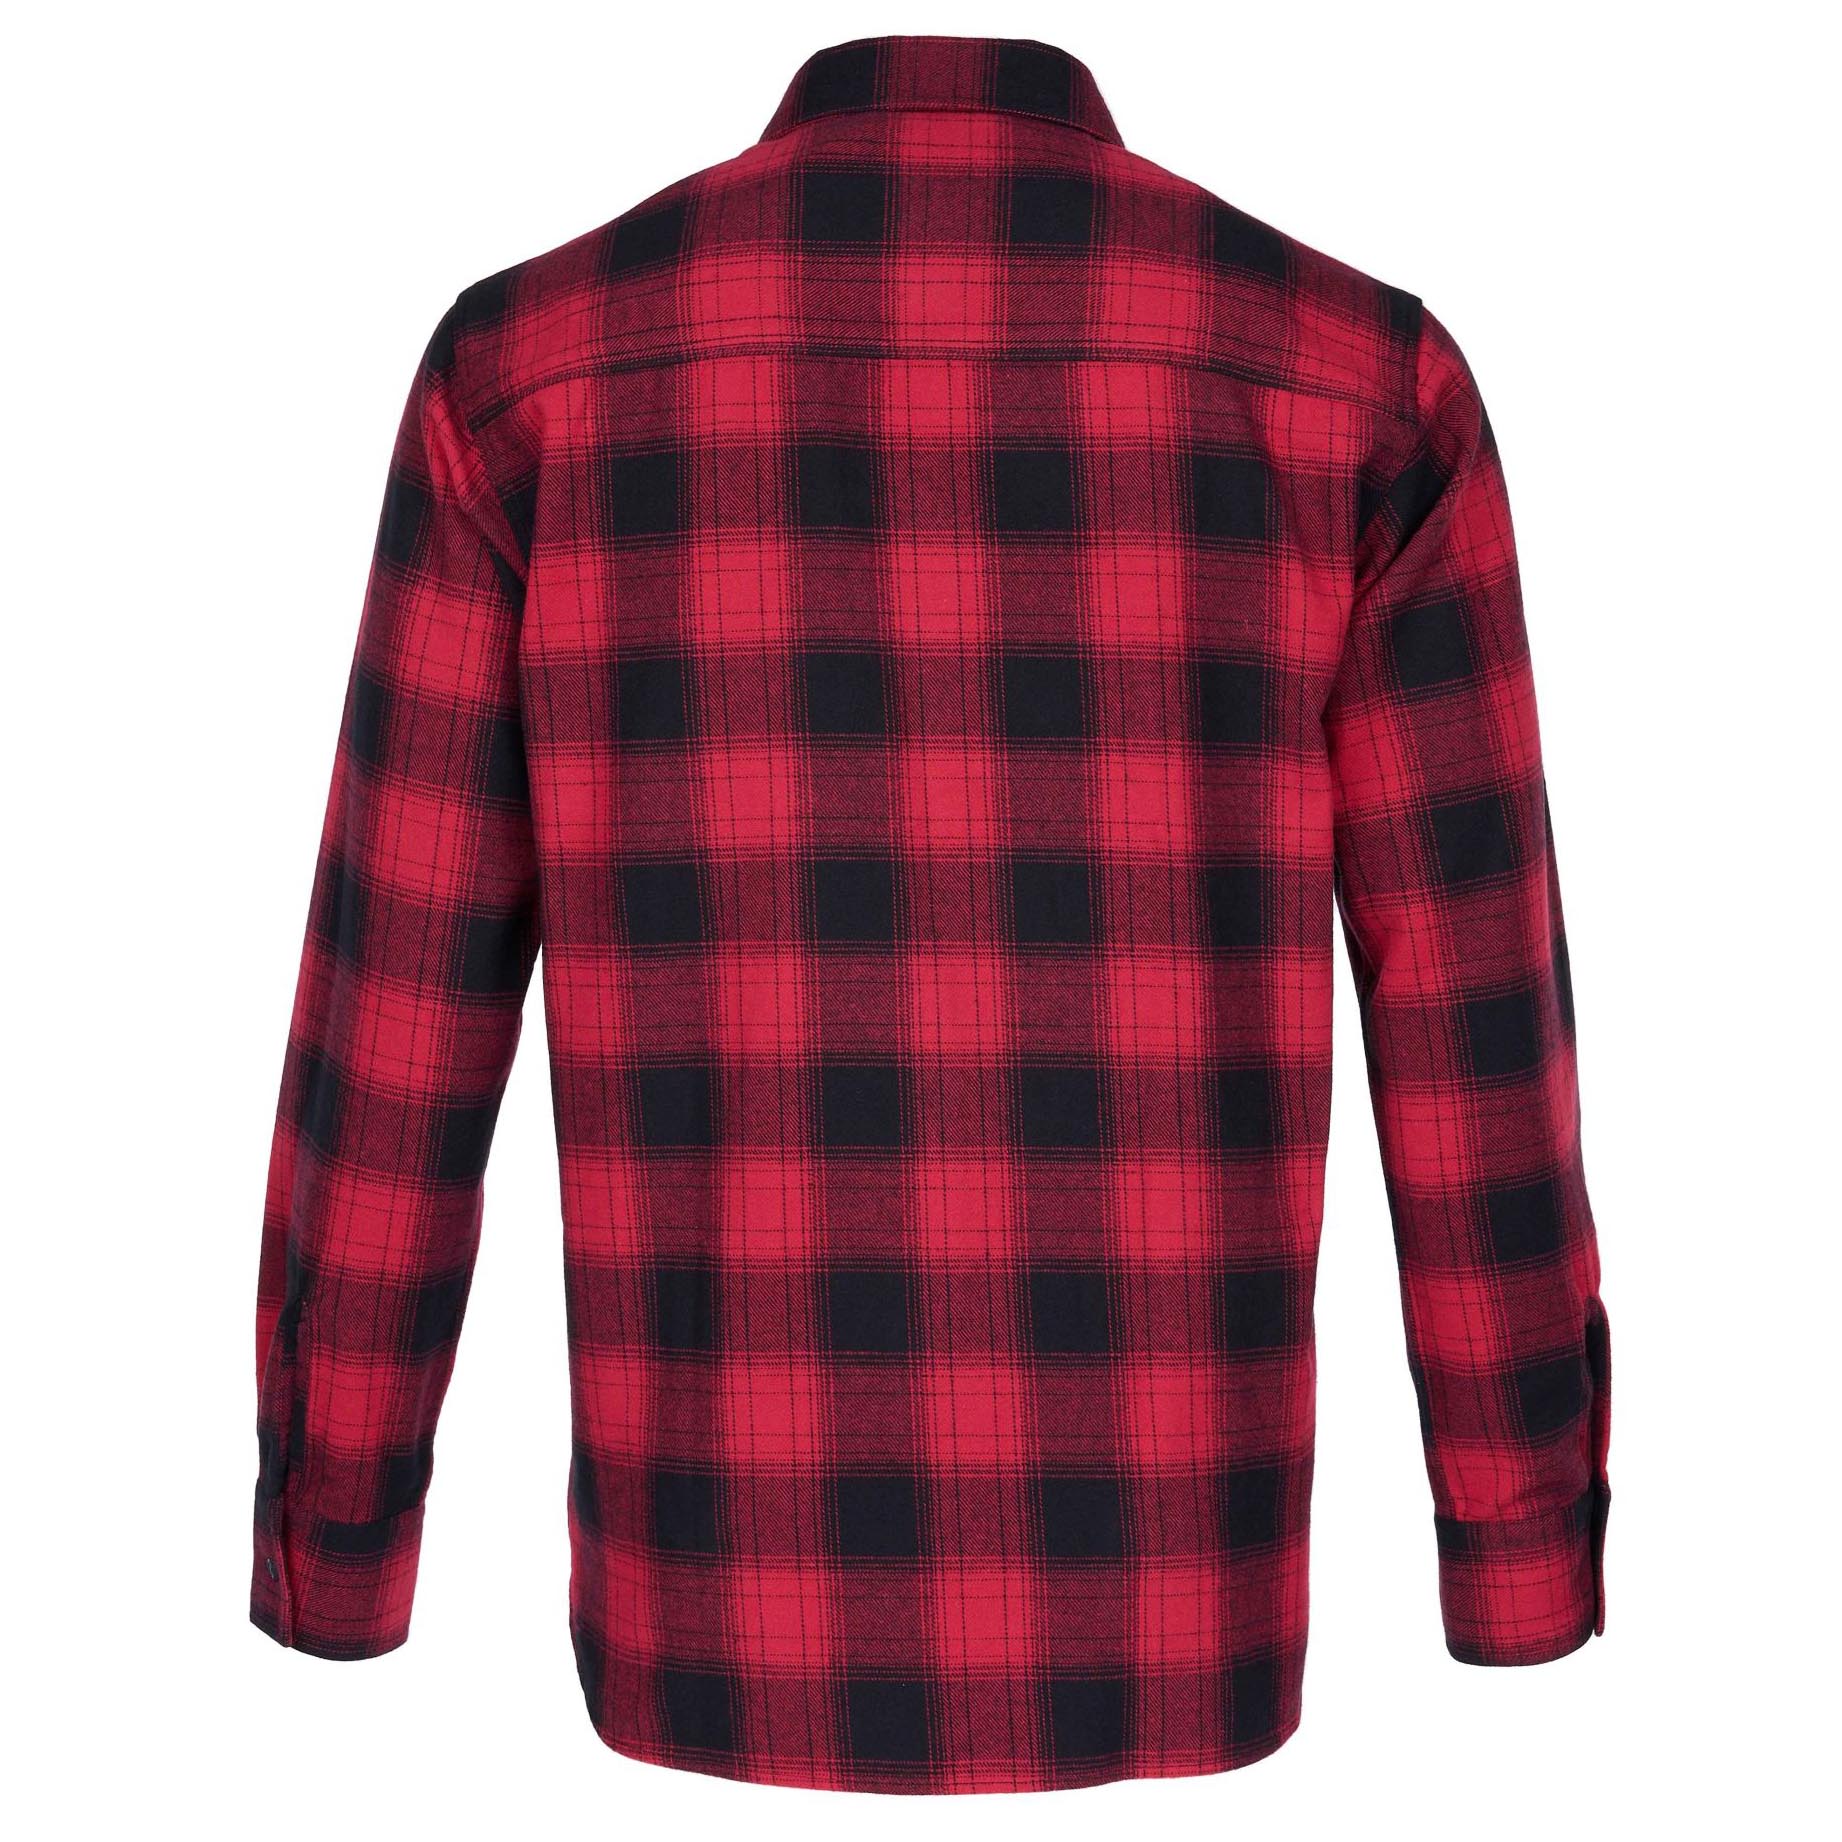 1937 Roamer Shirt Flannel Red Check